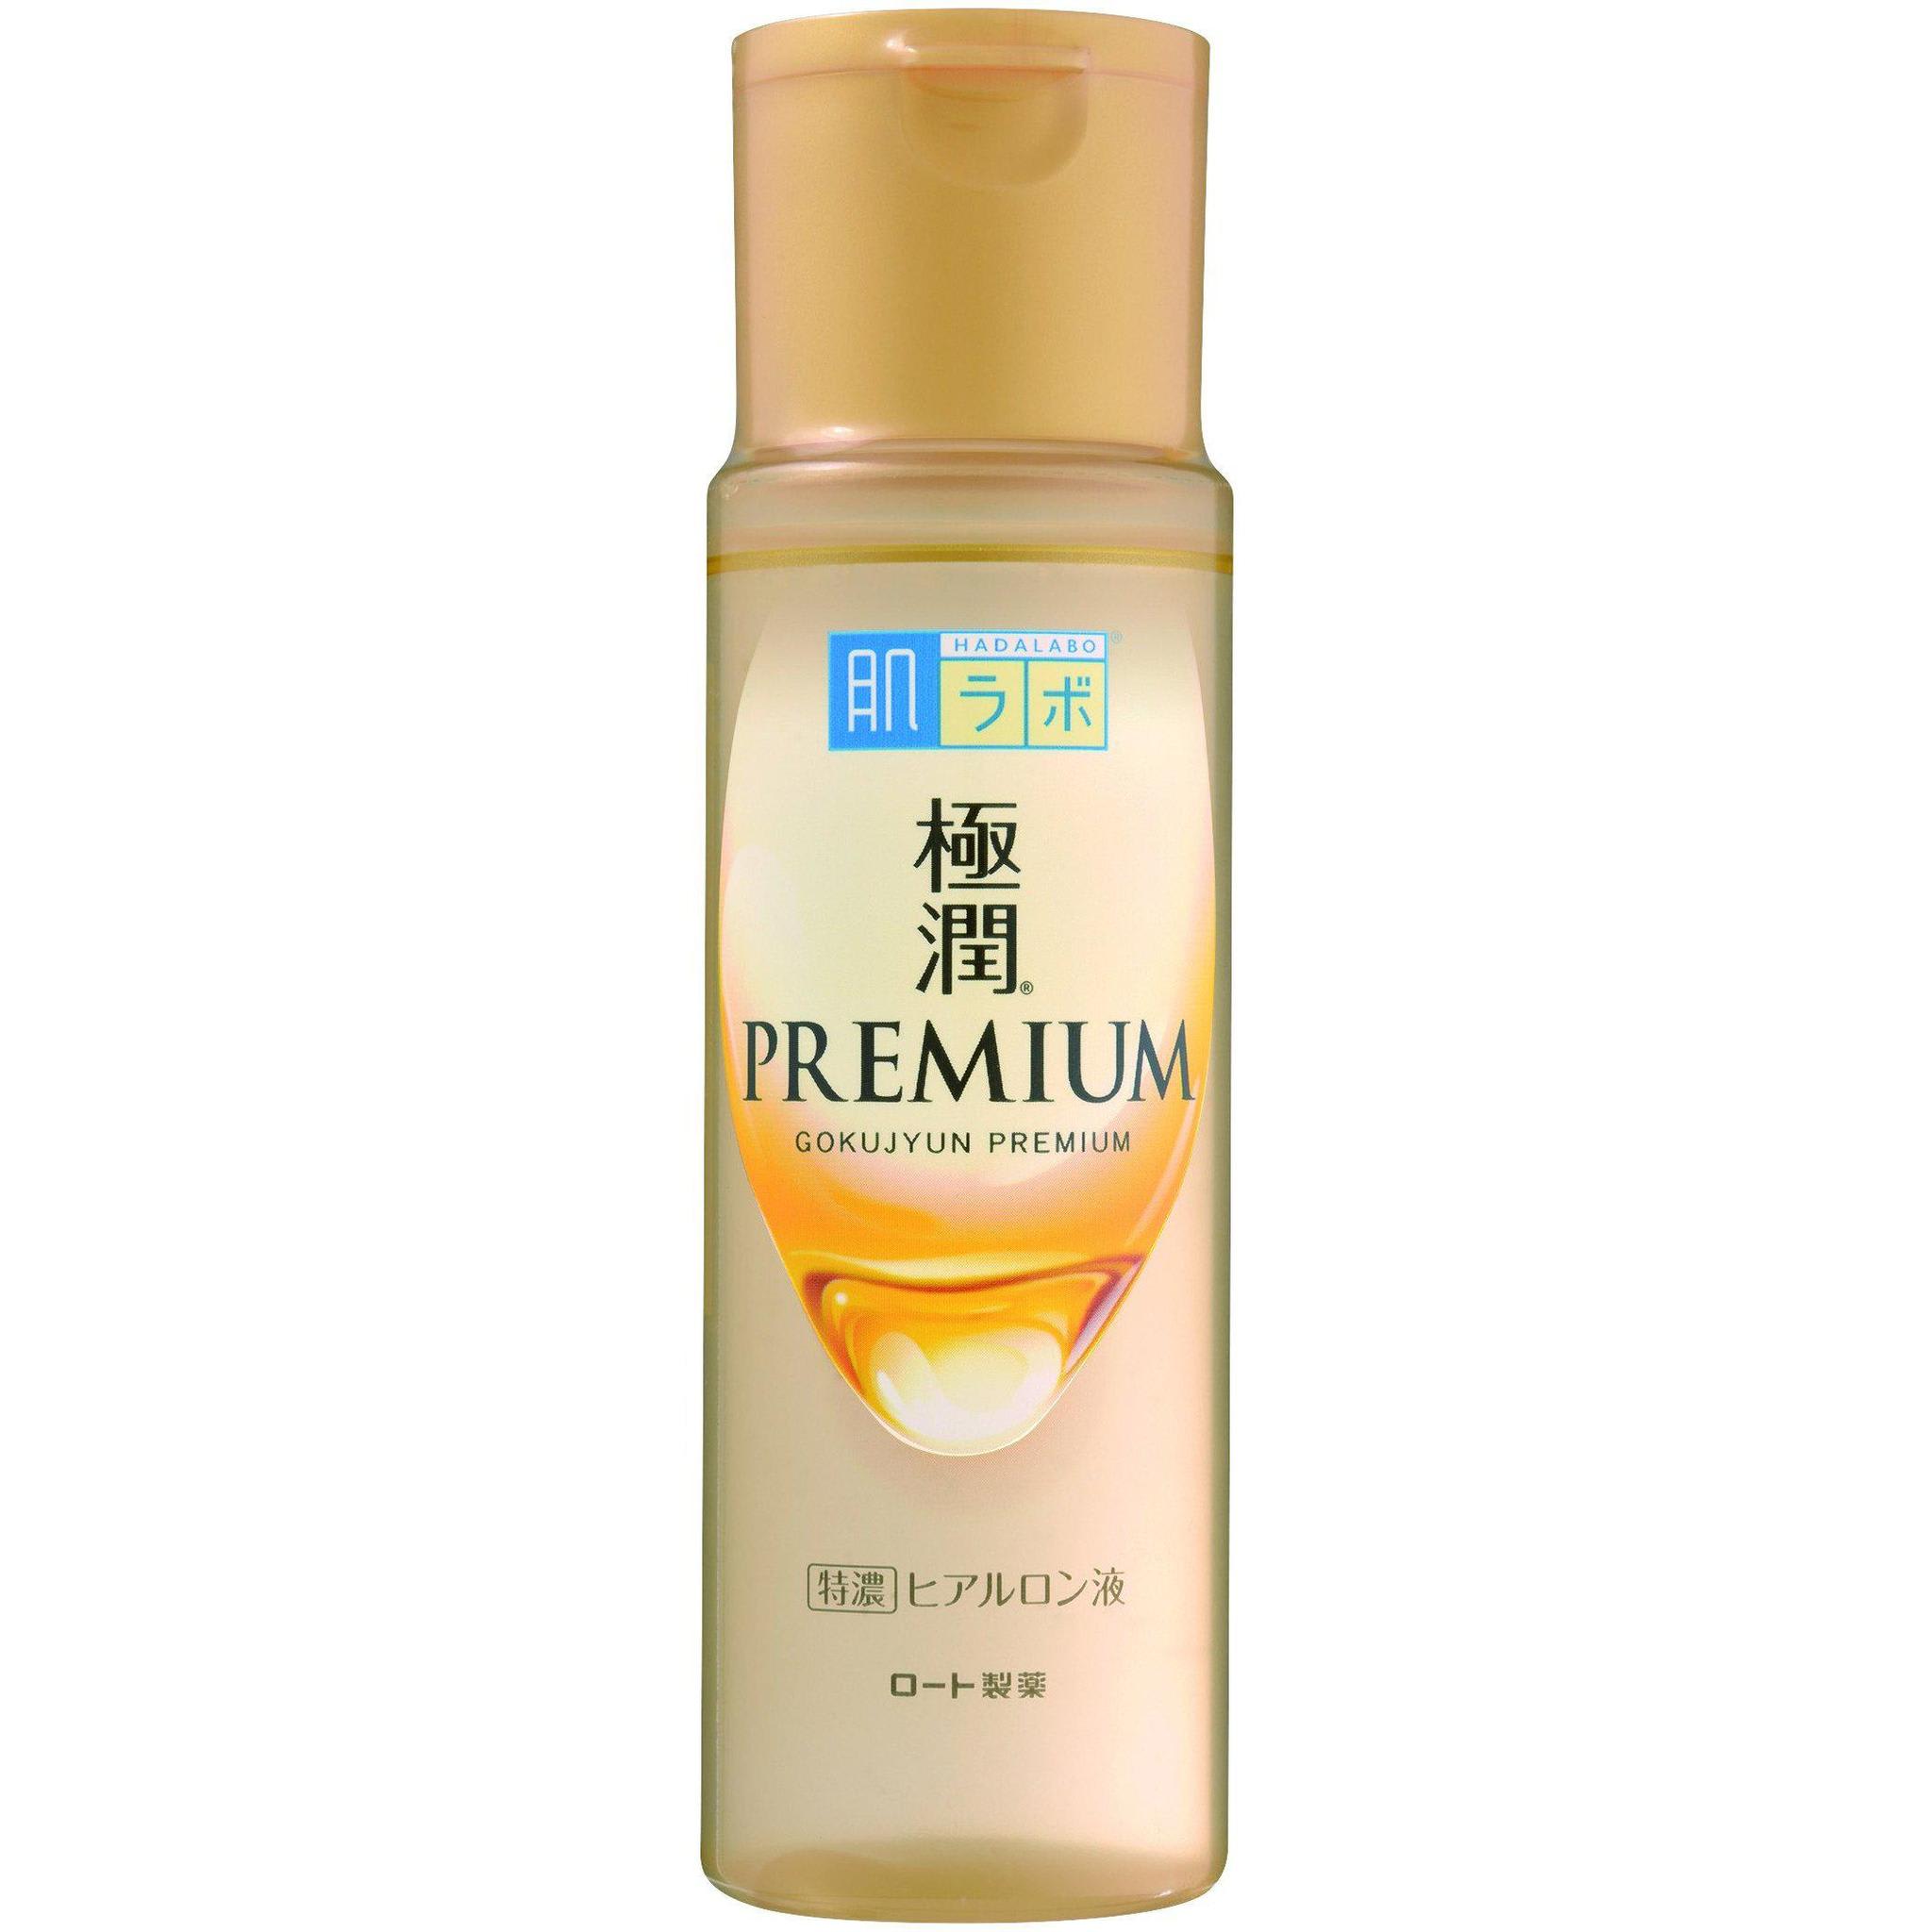 Hadalabo Gokujyun Premium Super Hyaluron Cream